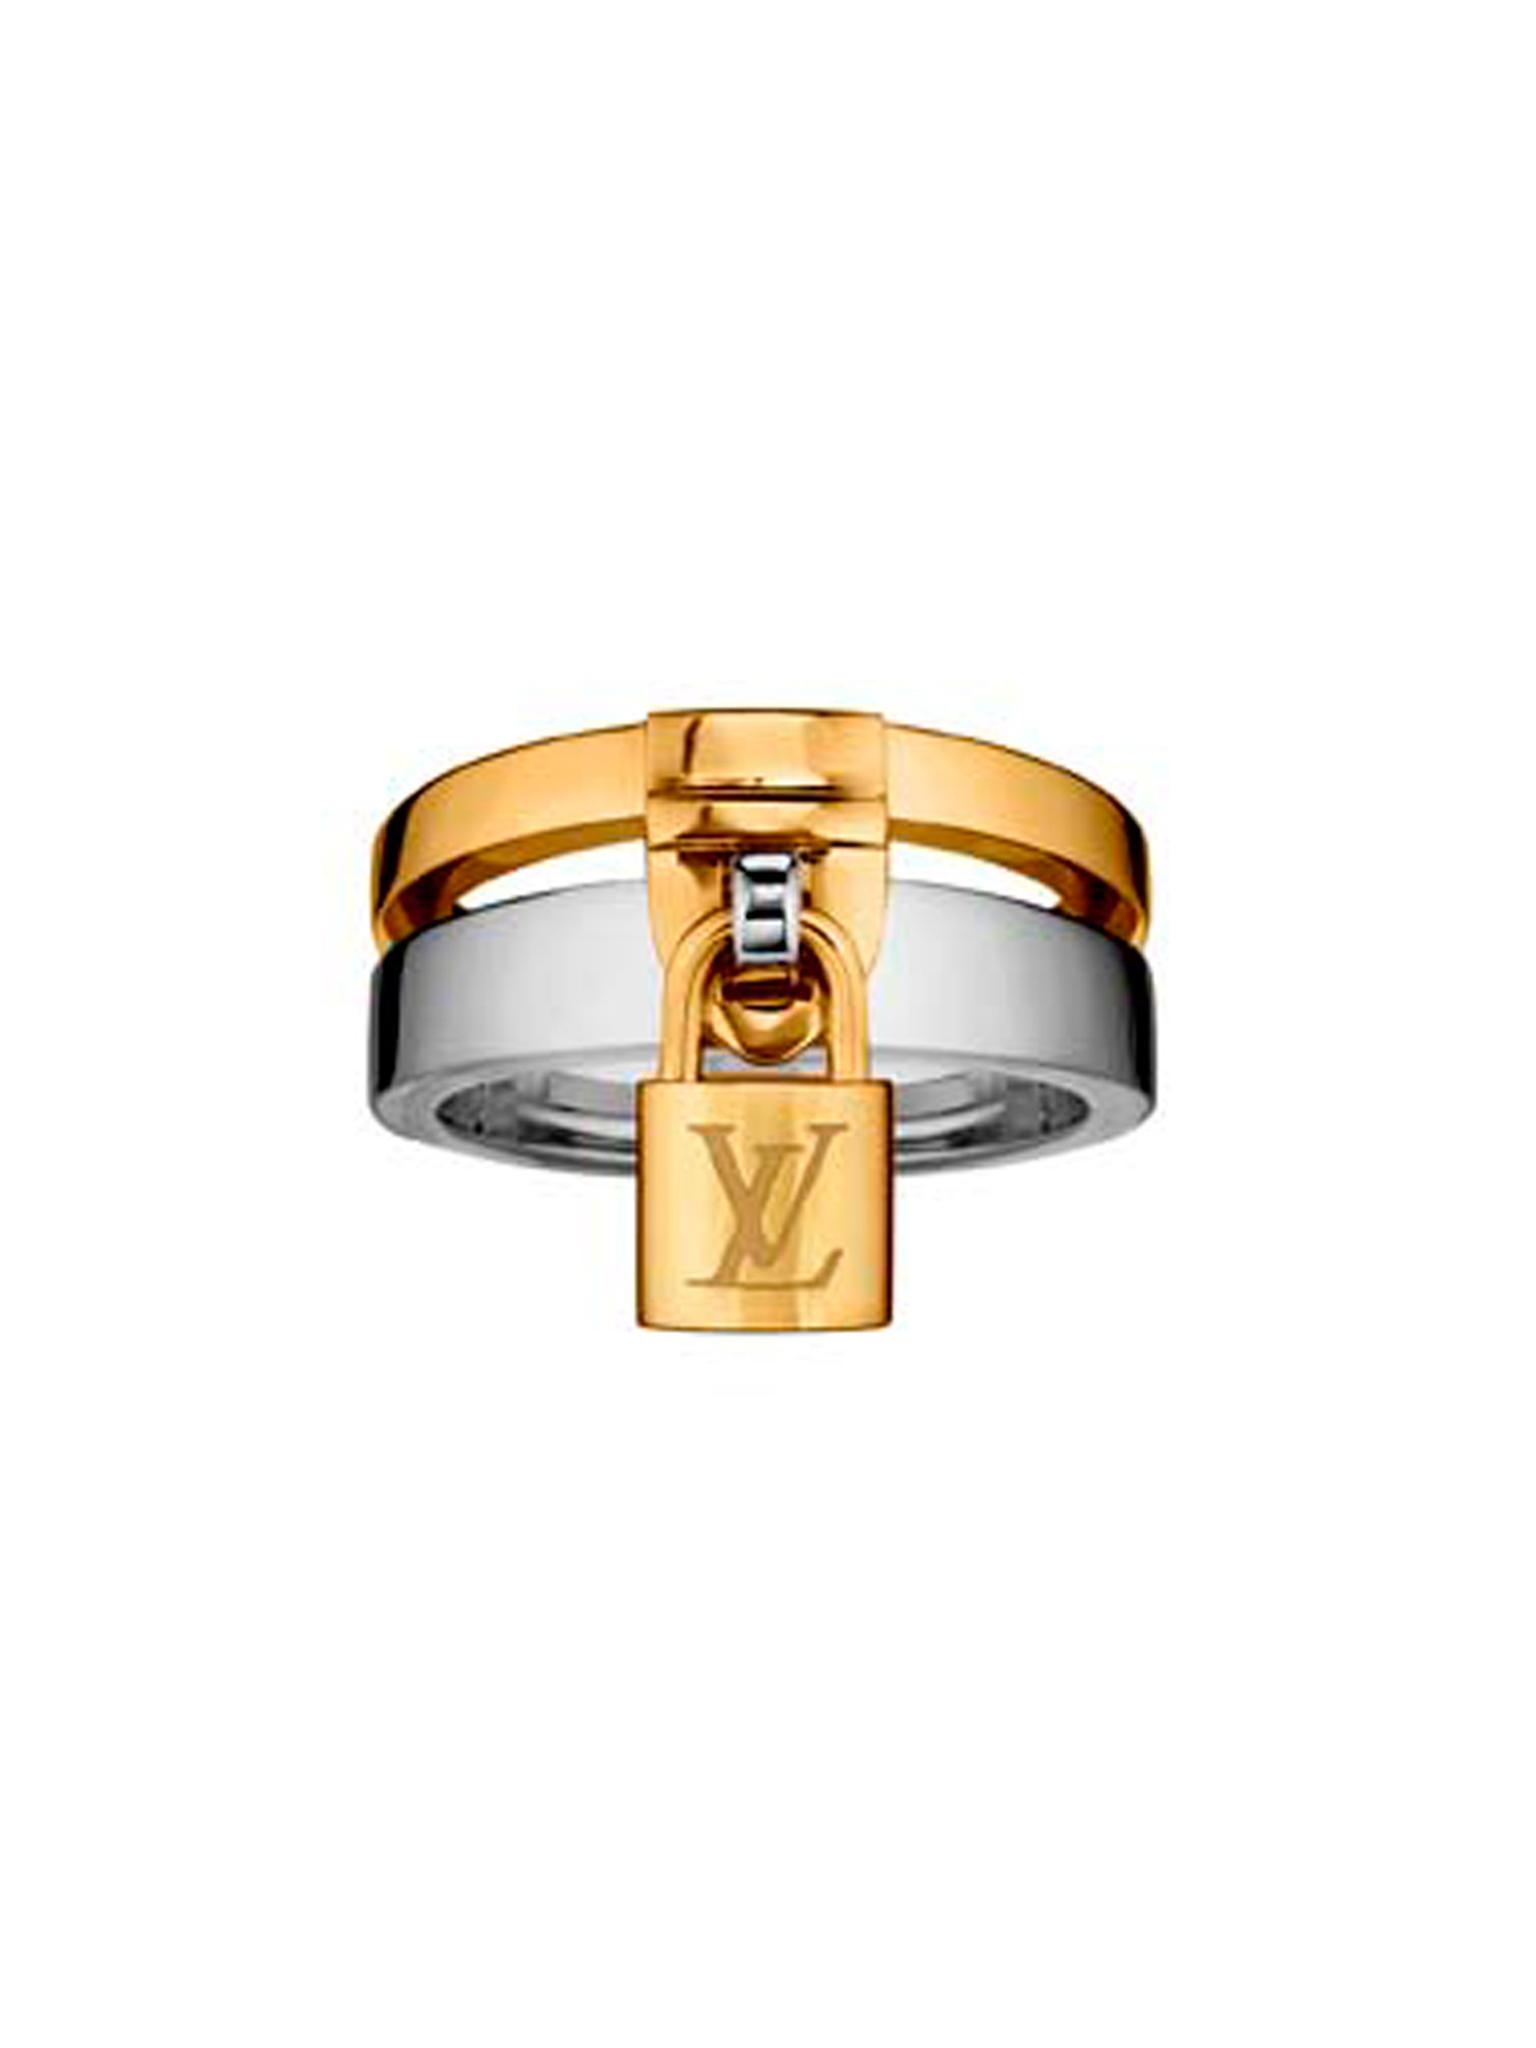 LIMITED EDITION Louis Vuitton Lockit Ring Diamond